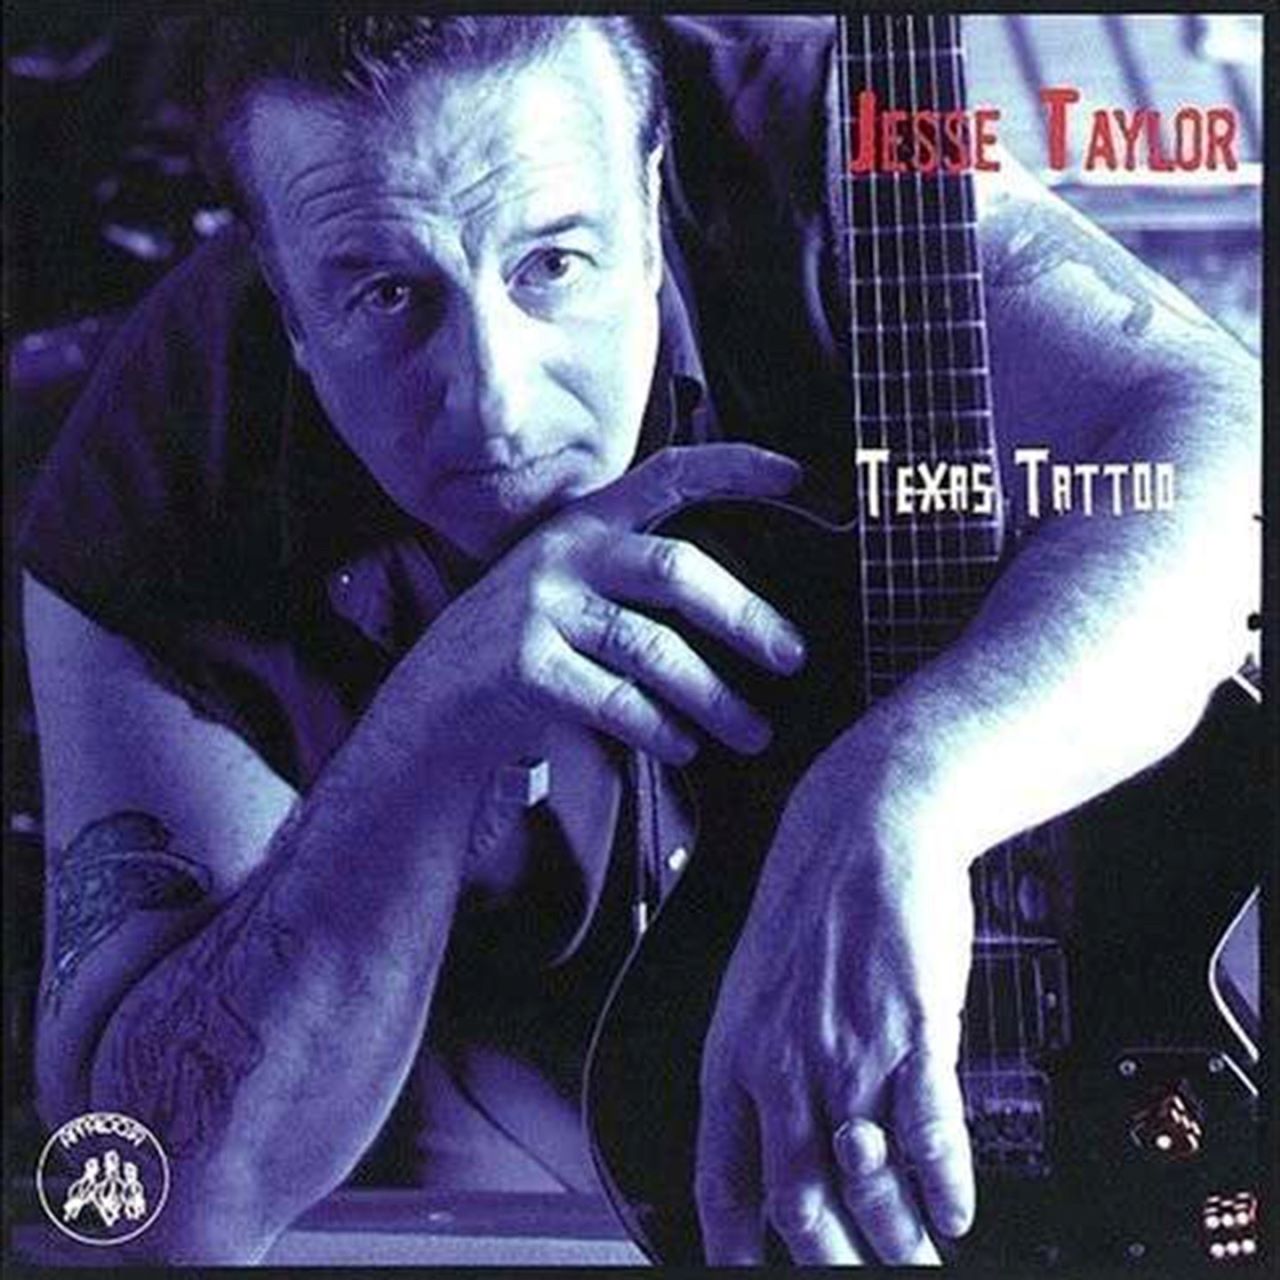 Jesse Taylor - Texas Tattoo cover album